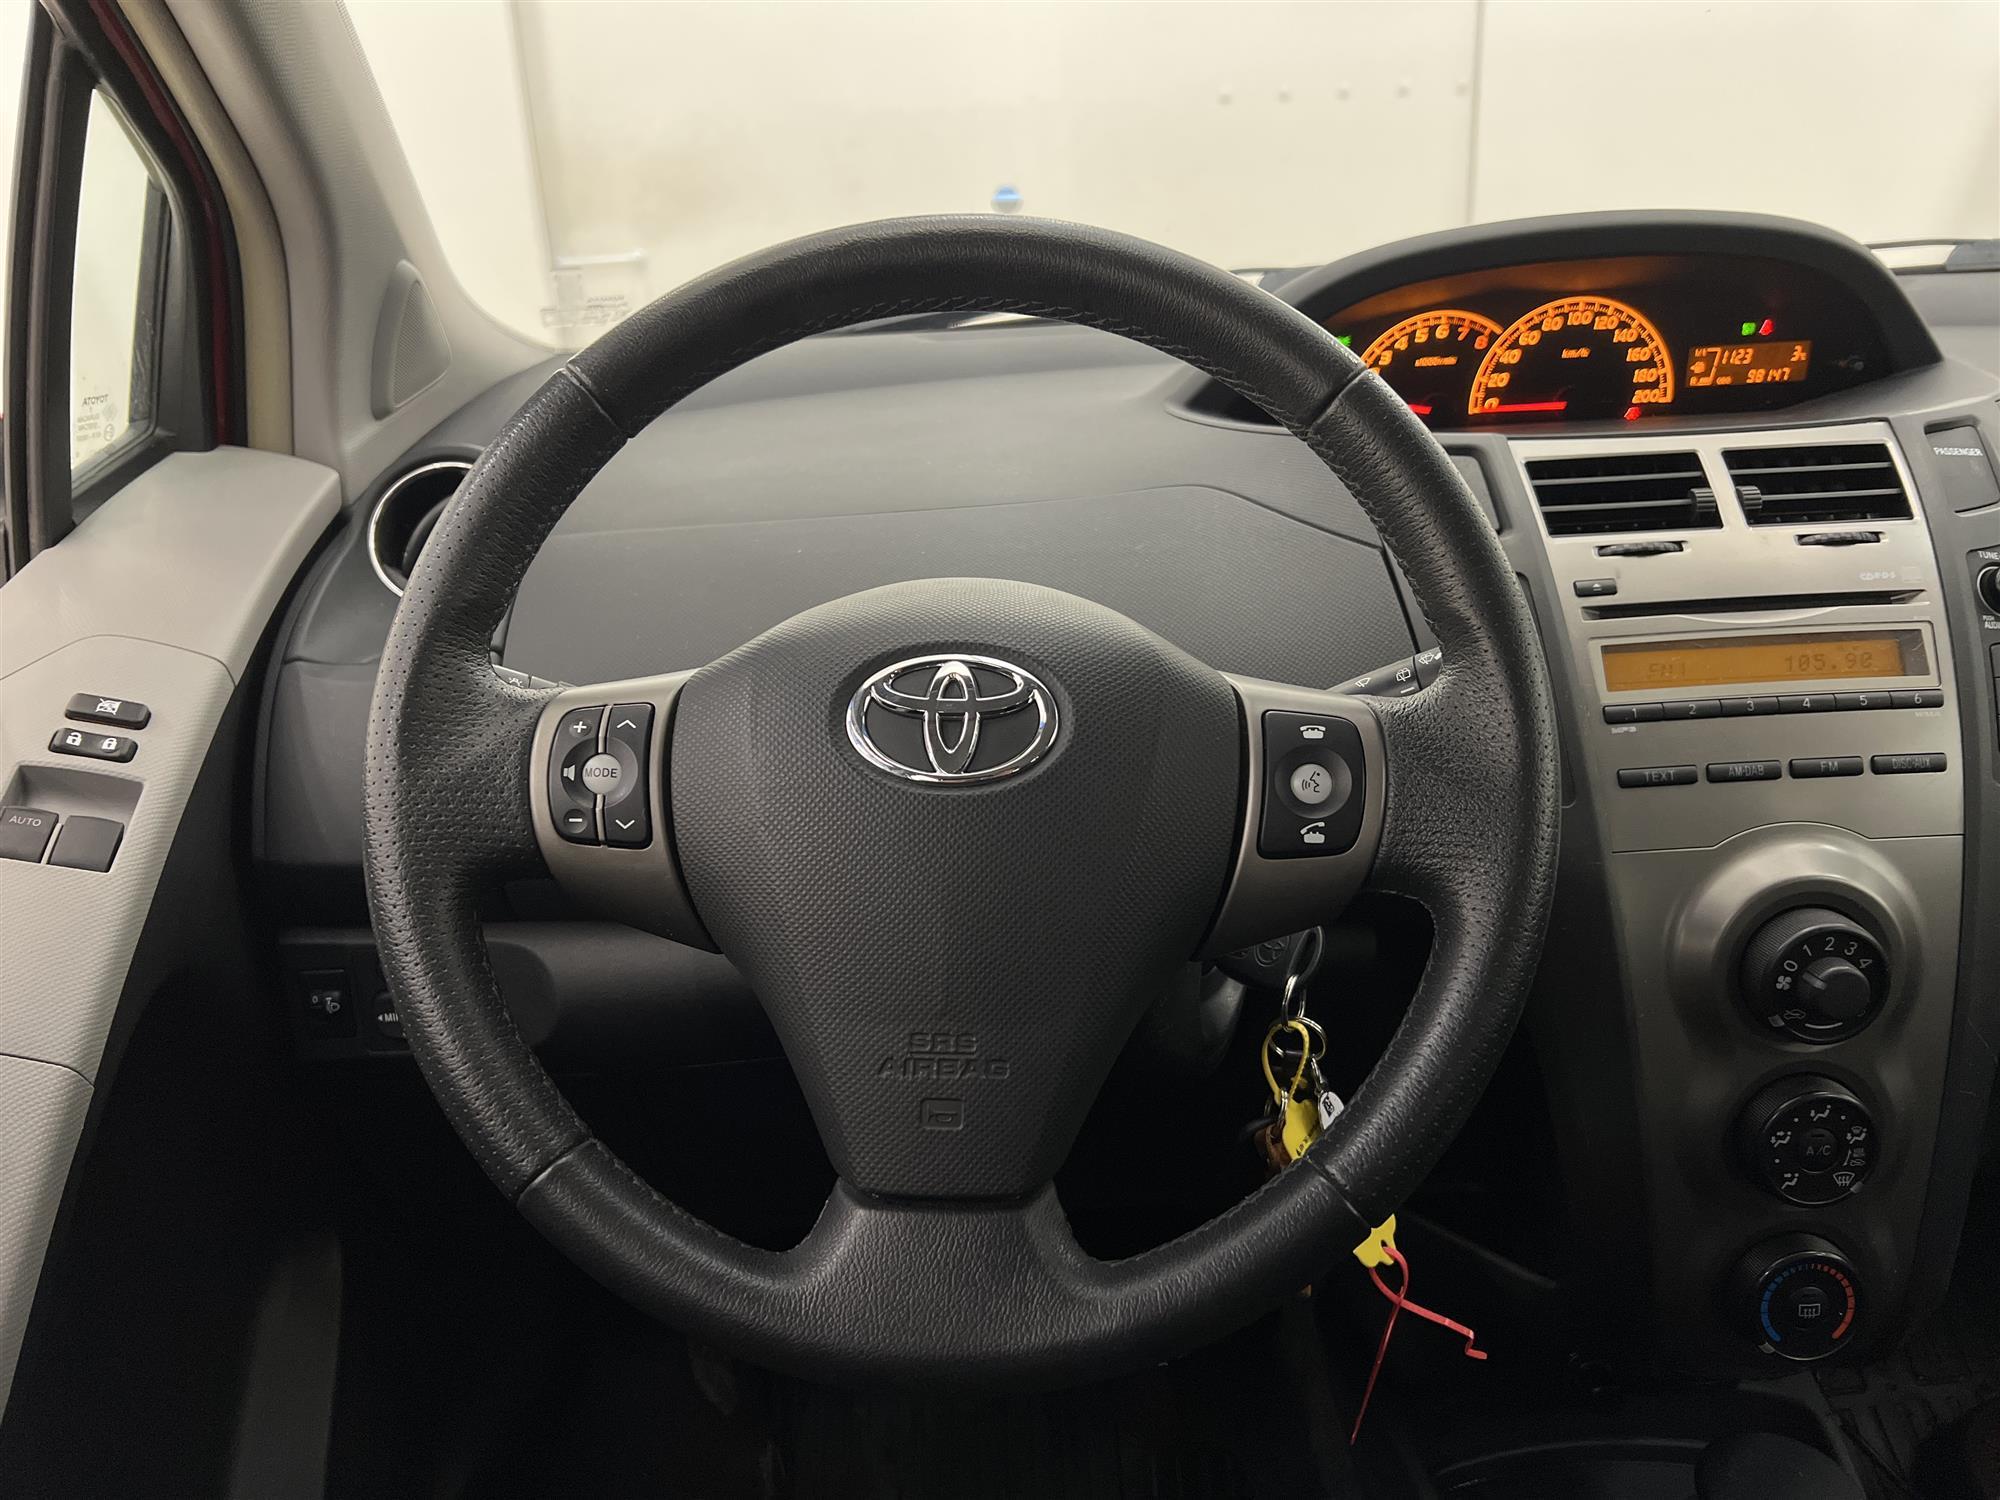 Toyota Yaris 1.33 Dual VVT-i 99hk 1 Brukare Välservad Nybes